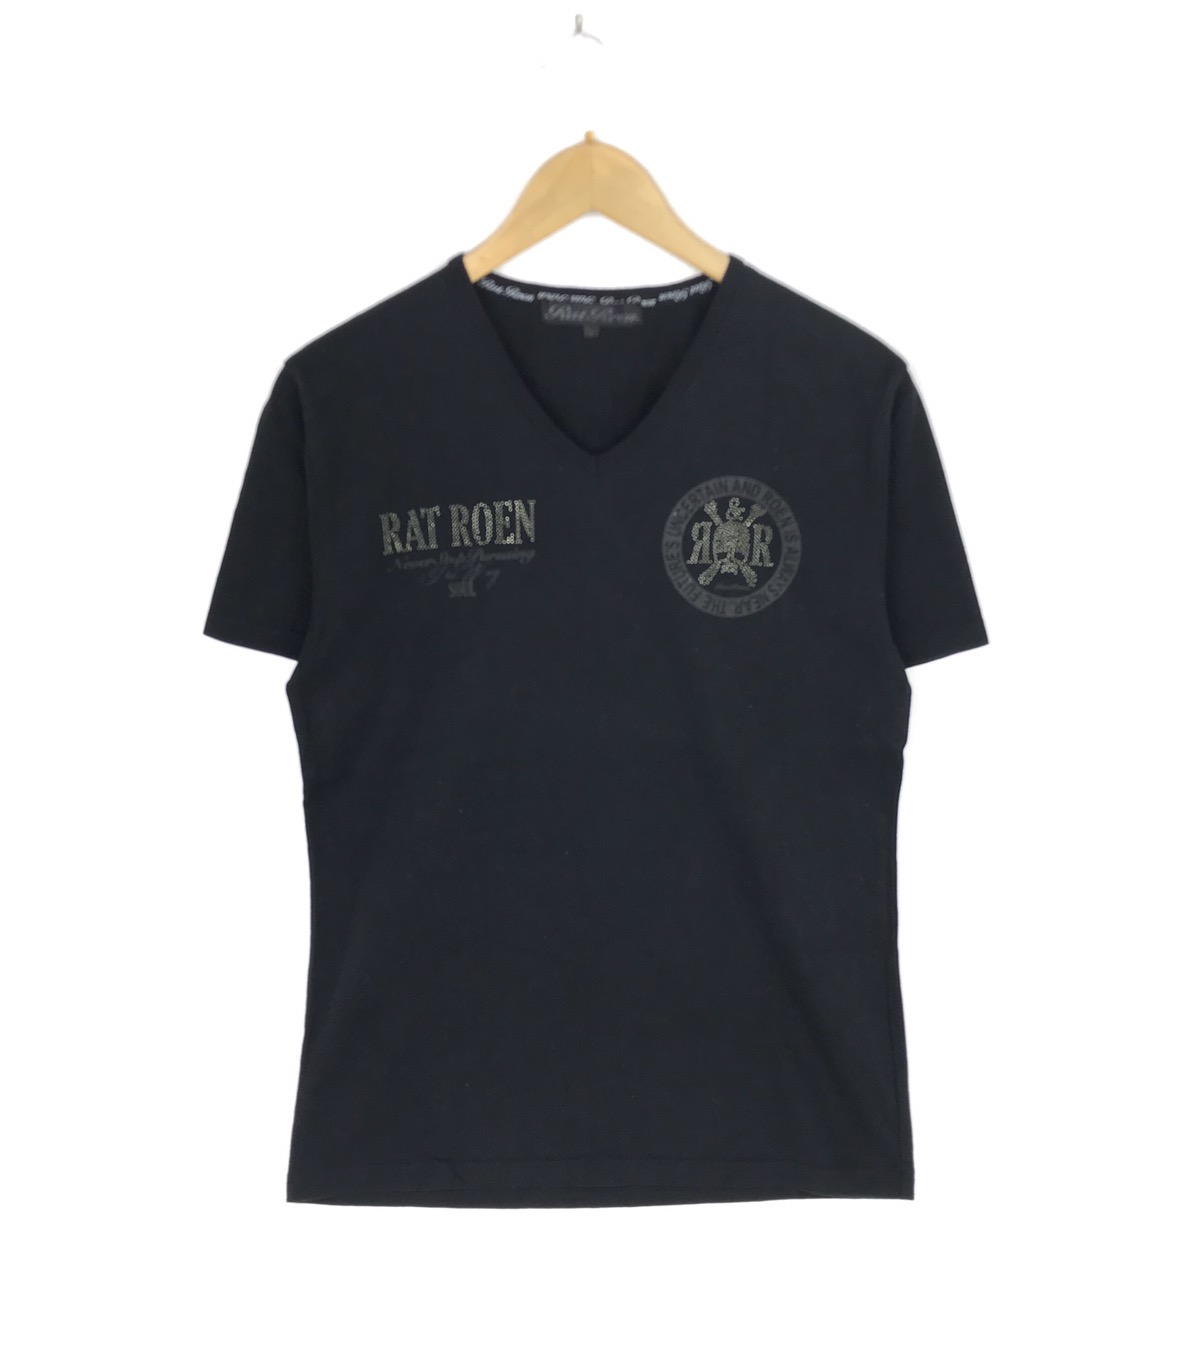 Vintage Rat Roen Tshirt Punk Shirt Japanese Brand - 2